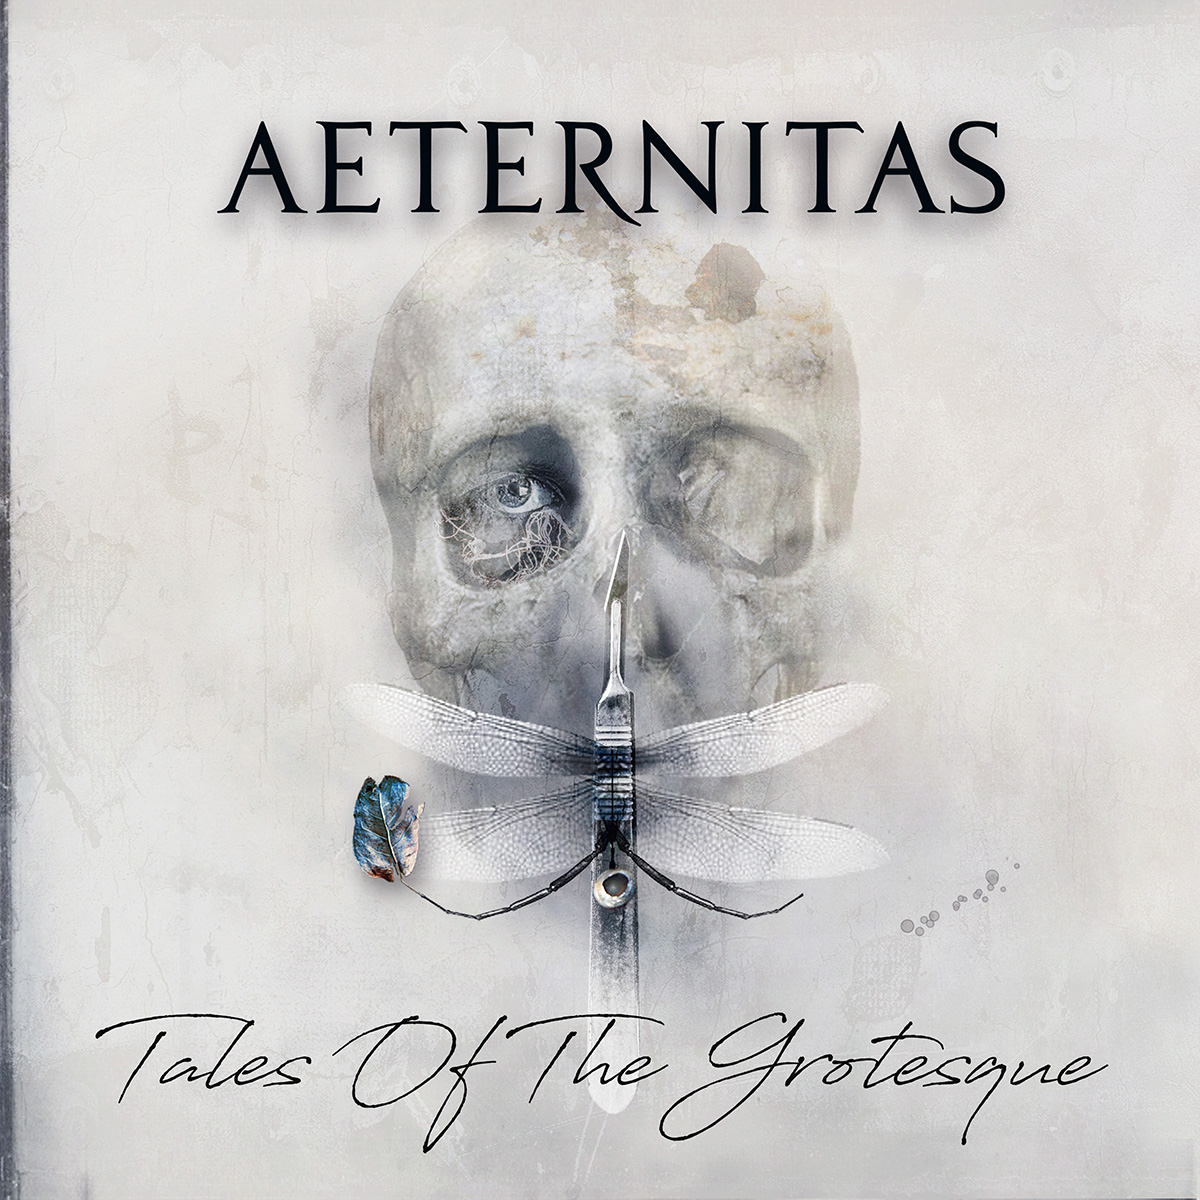 Aeternitas - The Experiment (clip)